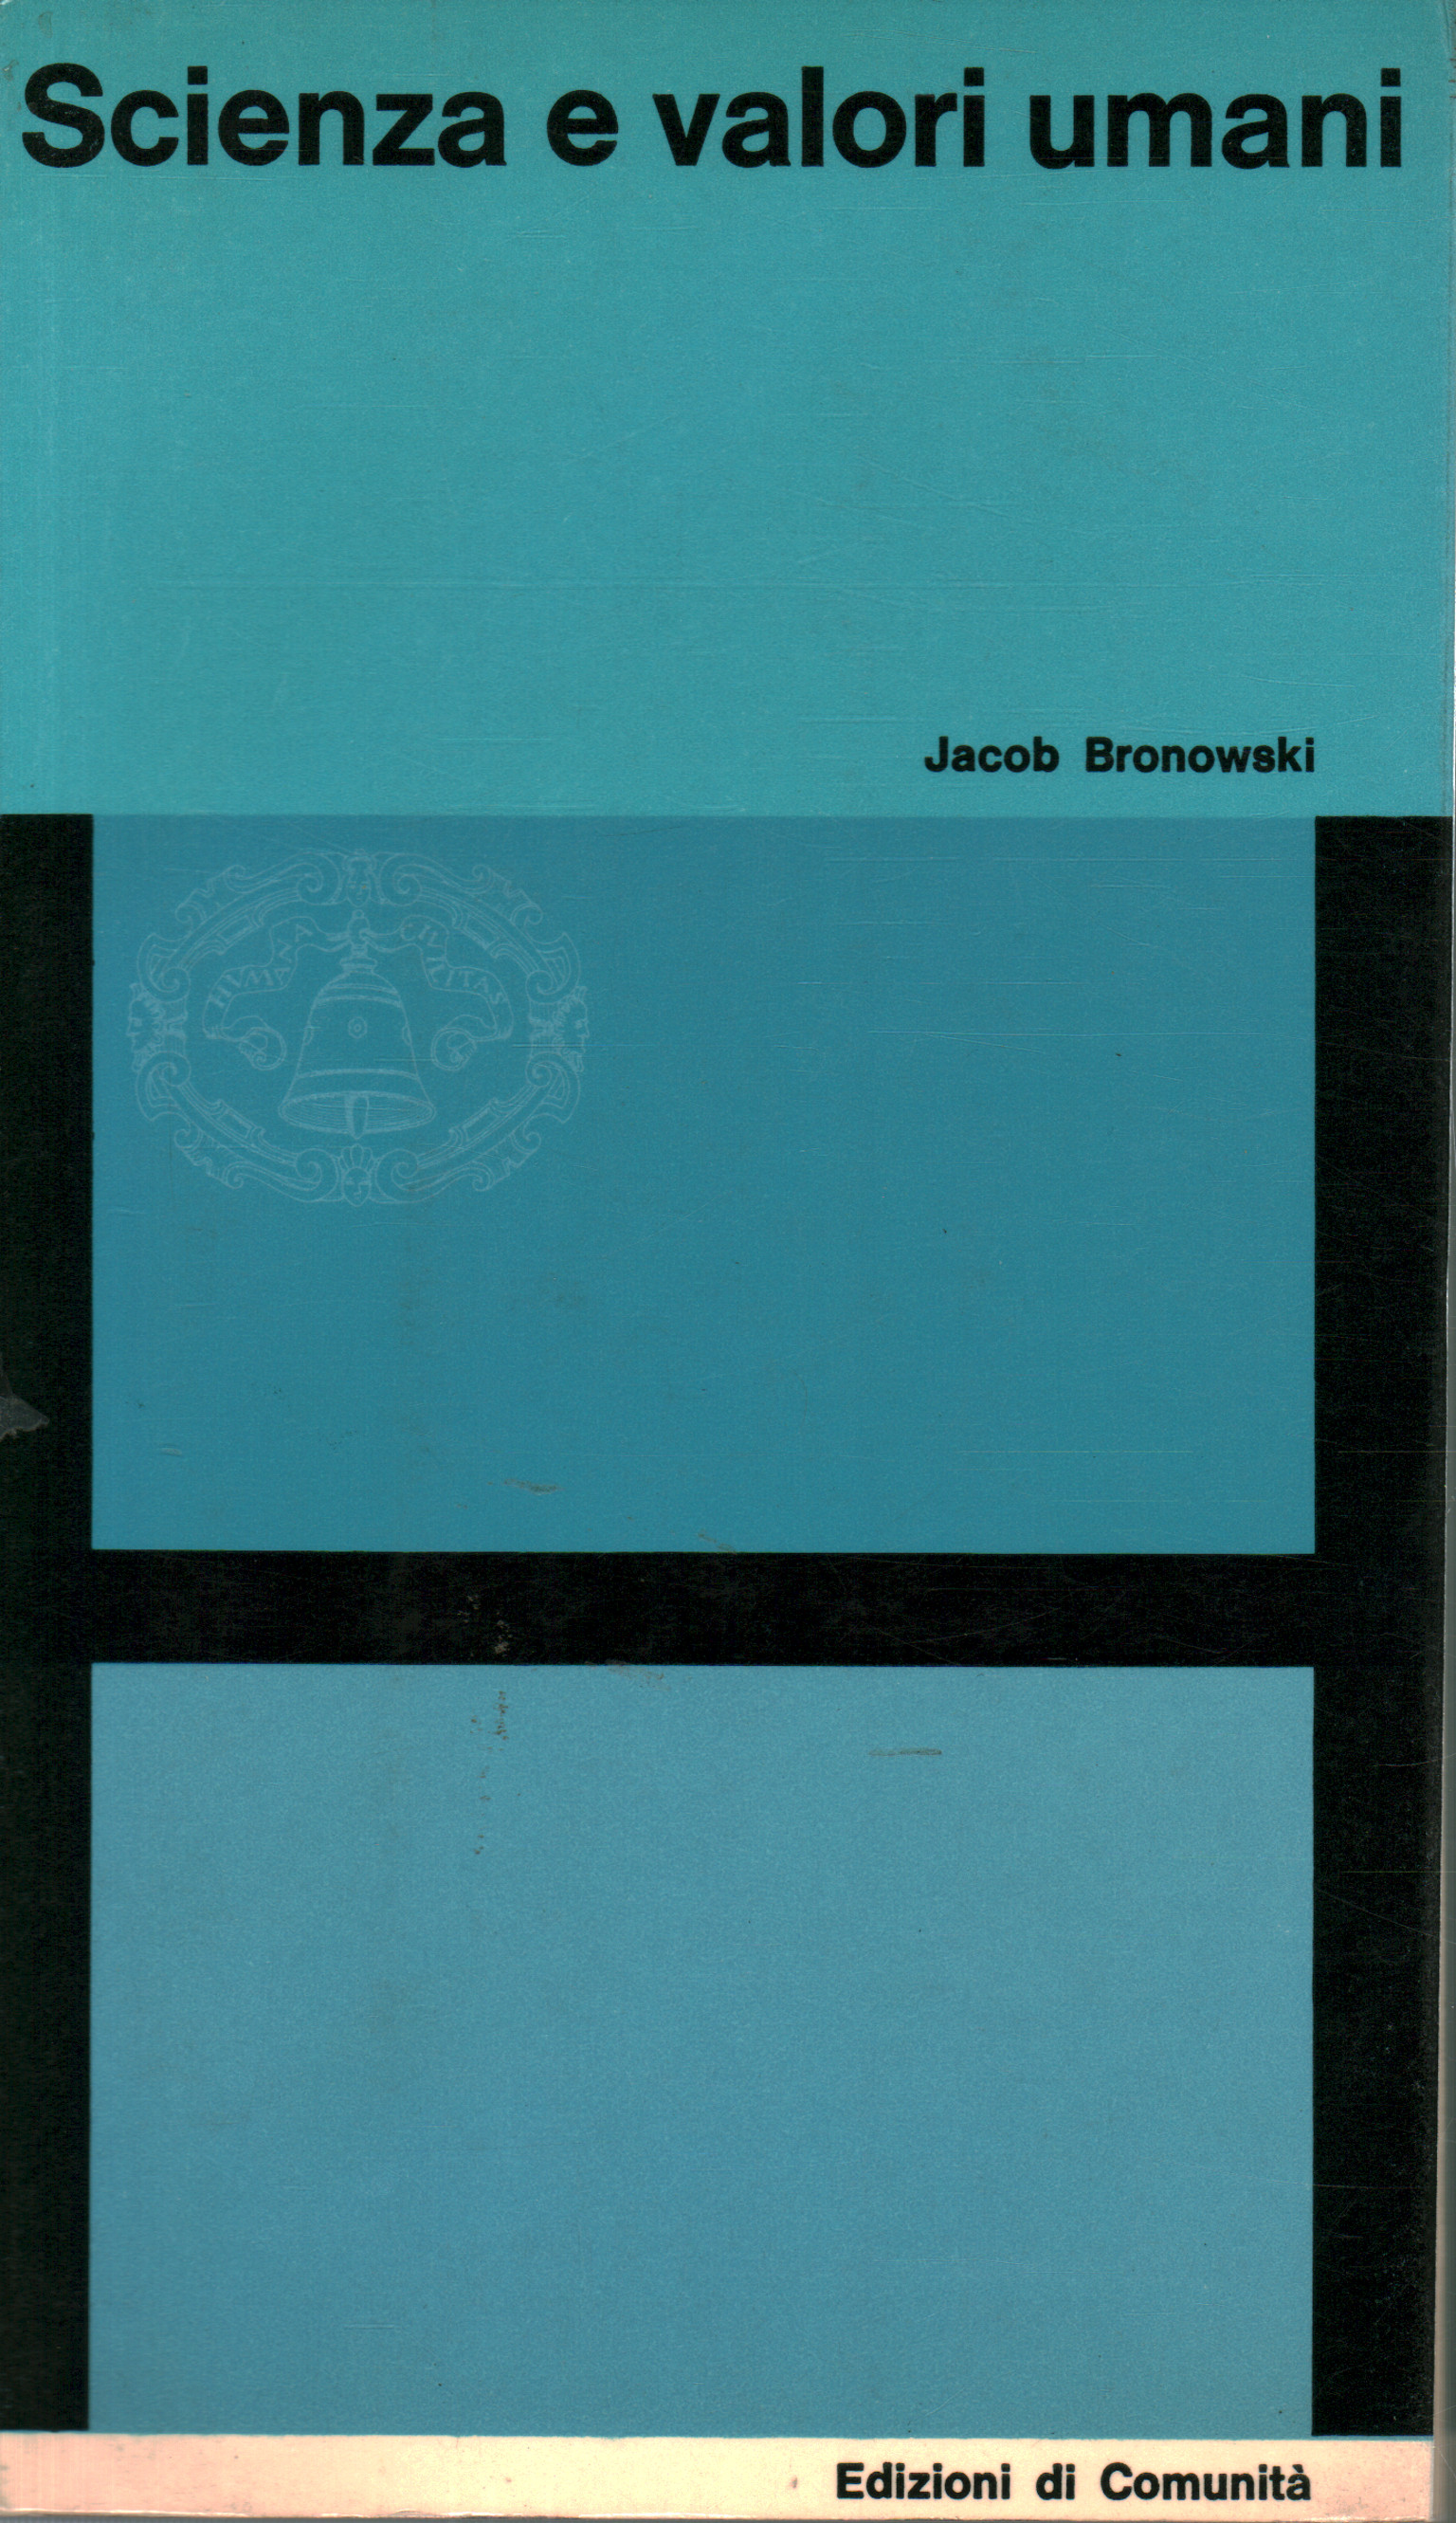 Science and human values, Jacob Bronowski